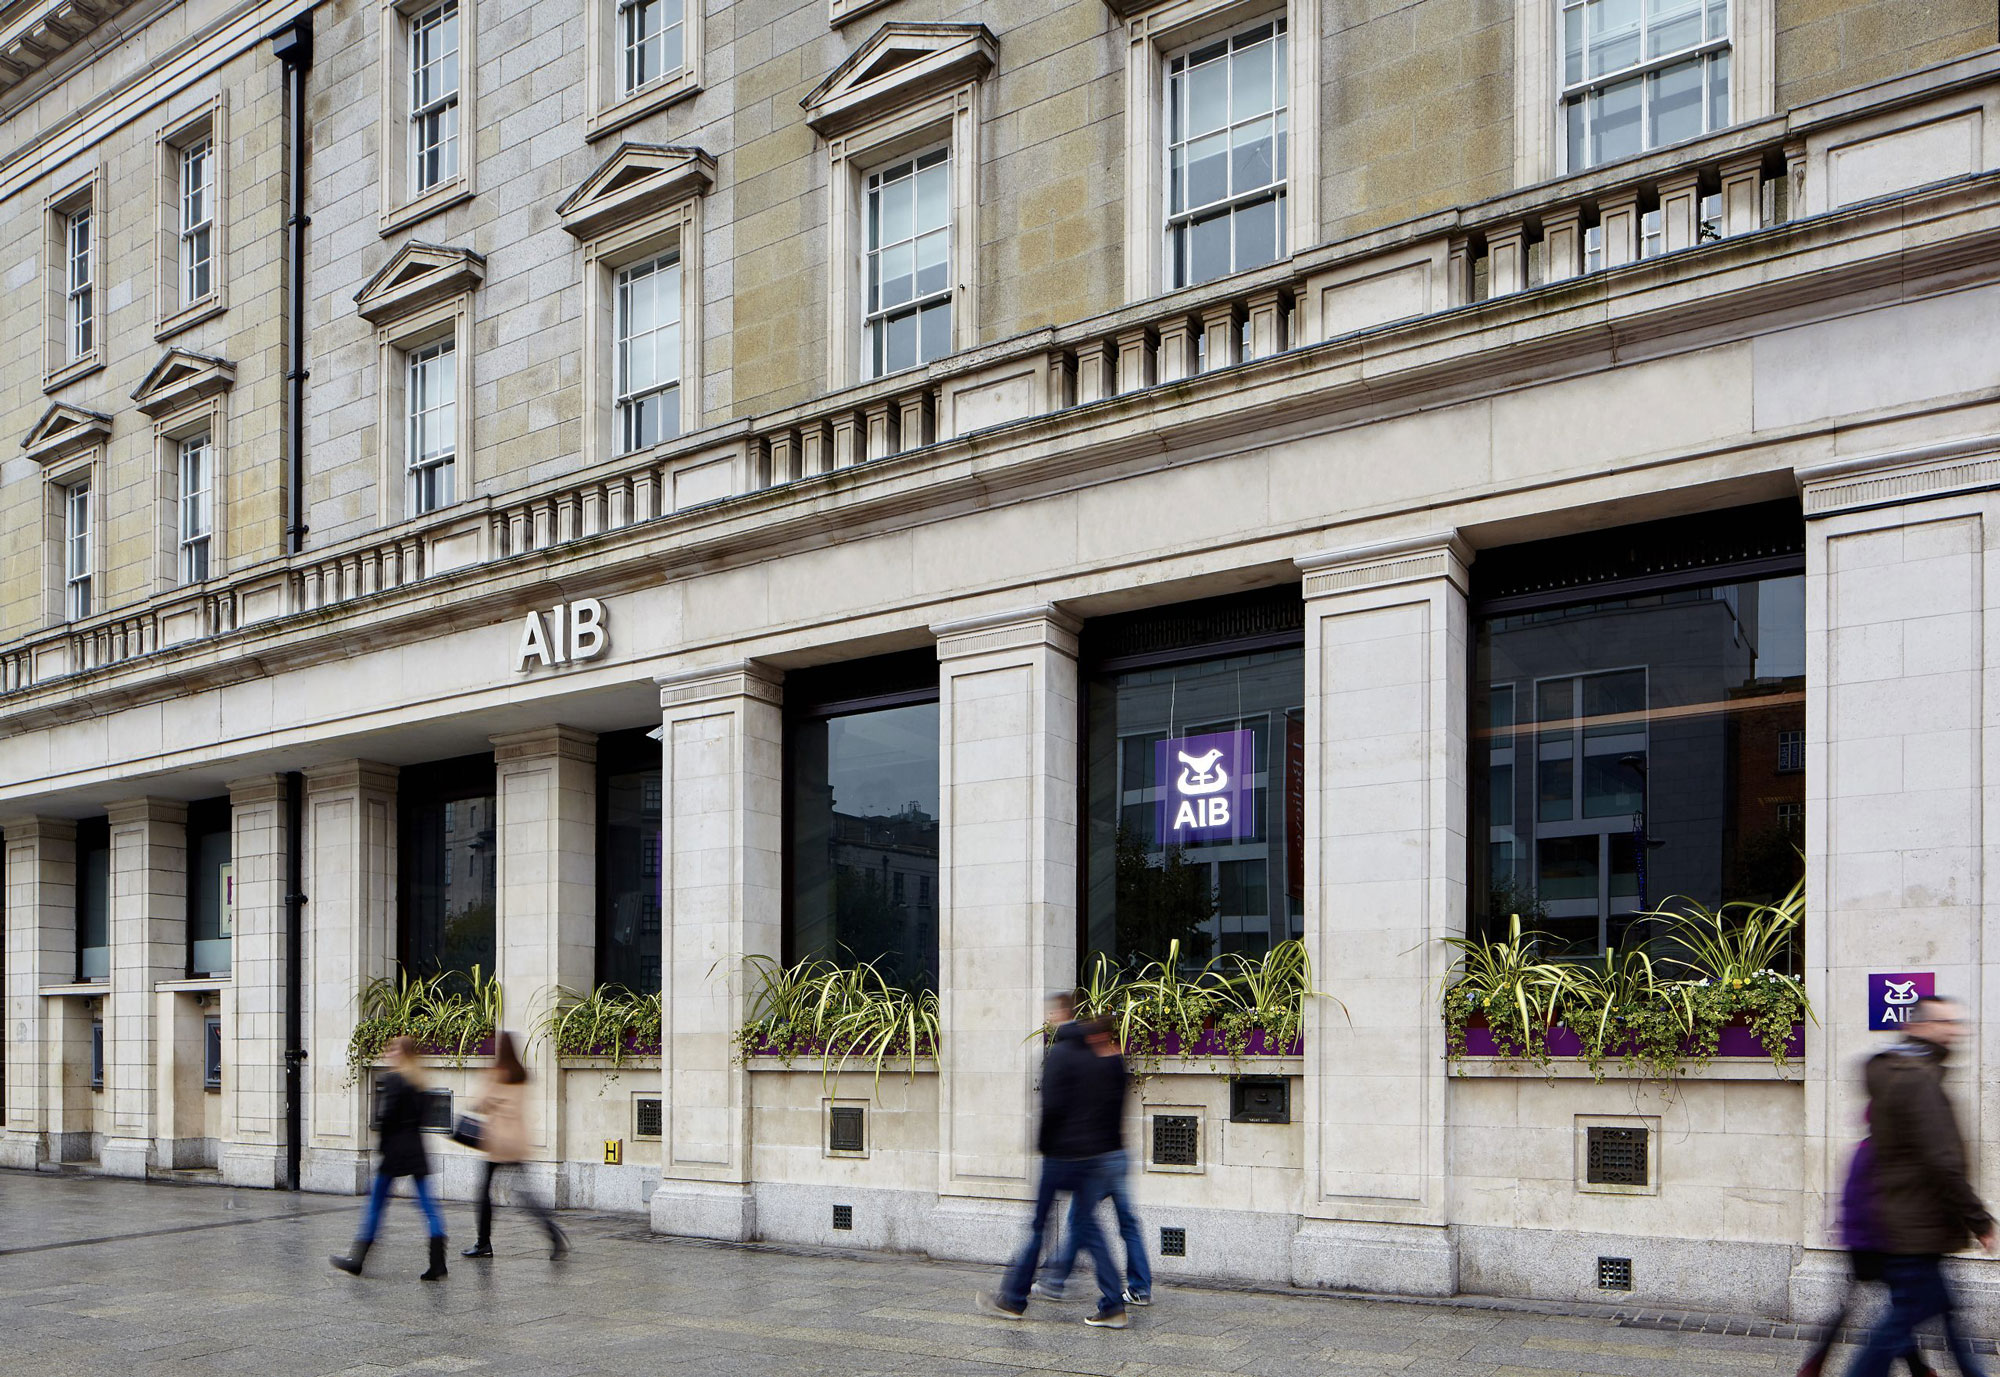 AIB Building in Dublin, Ireland, displaying new logo design in window